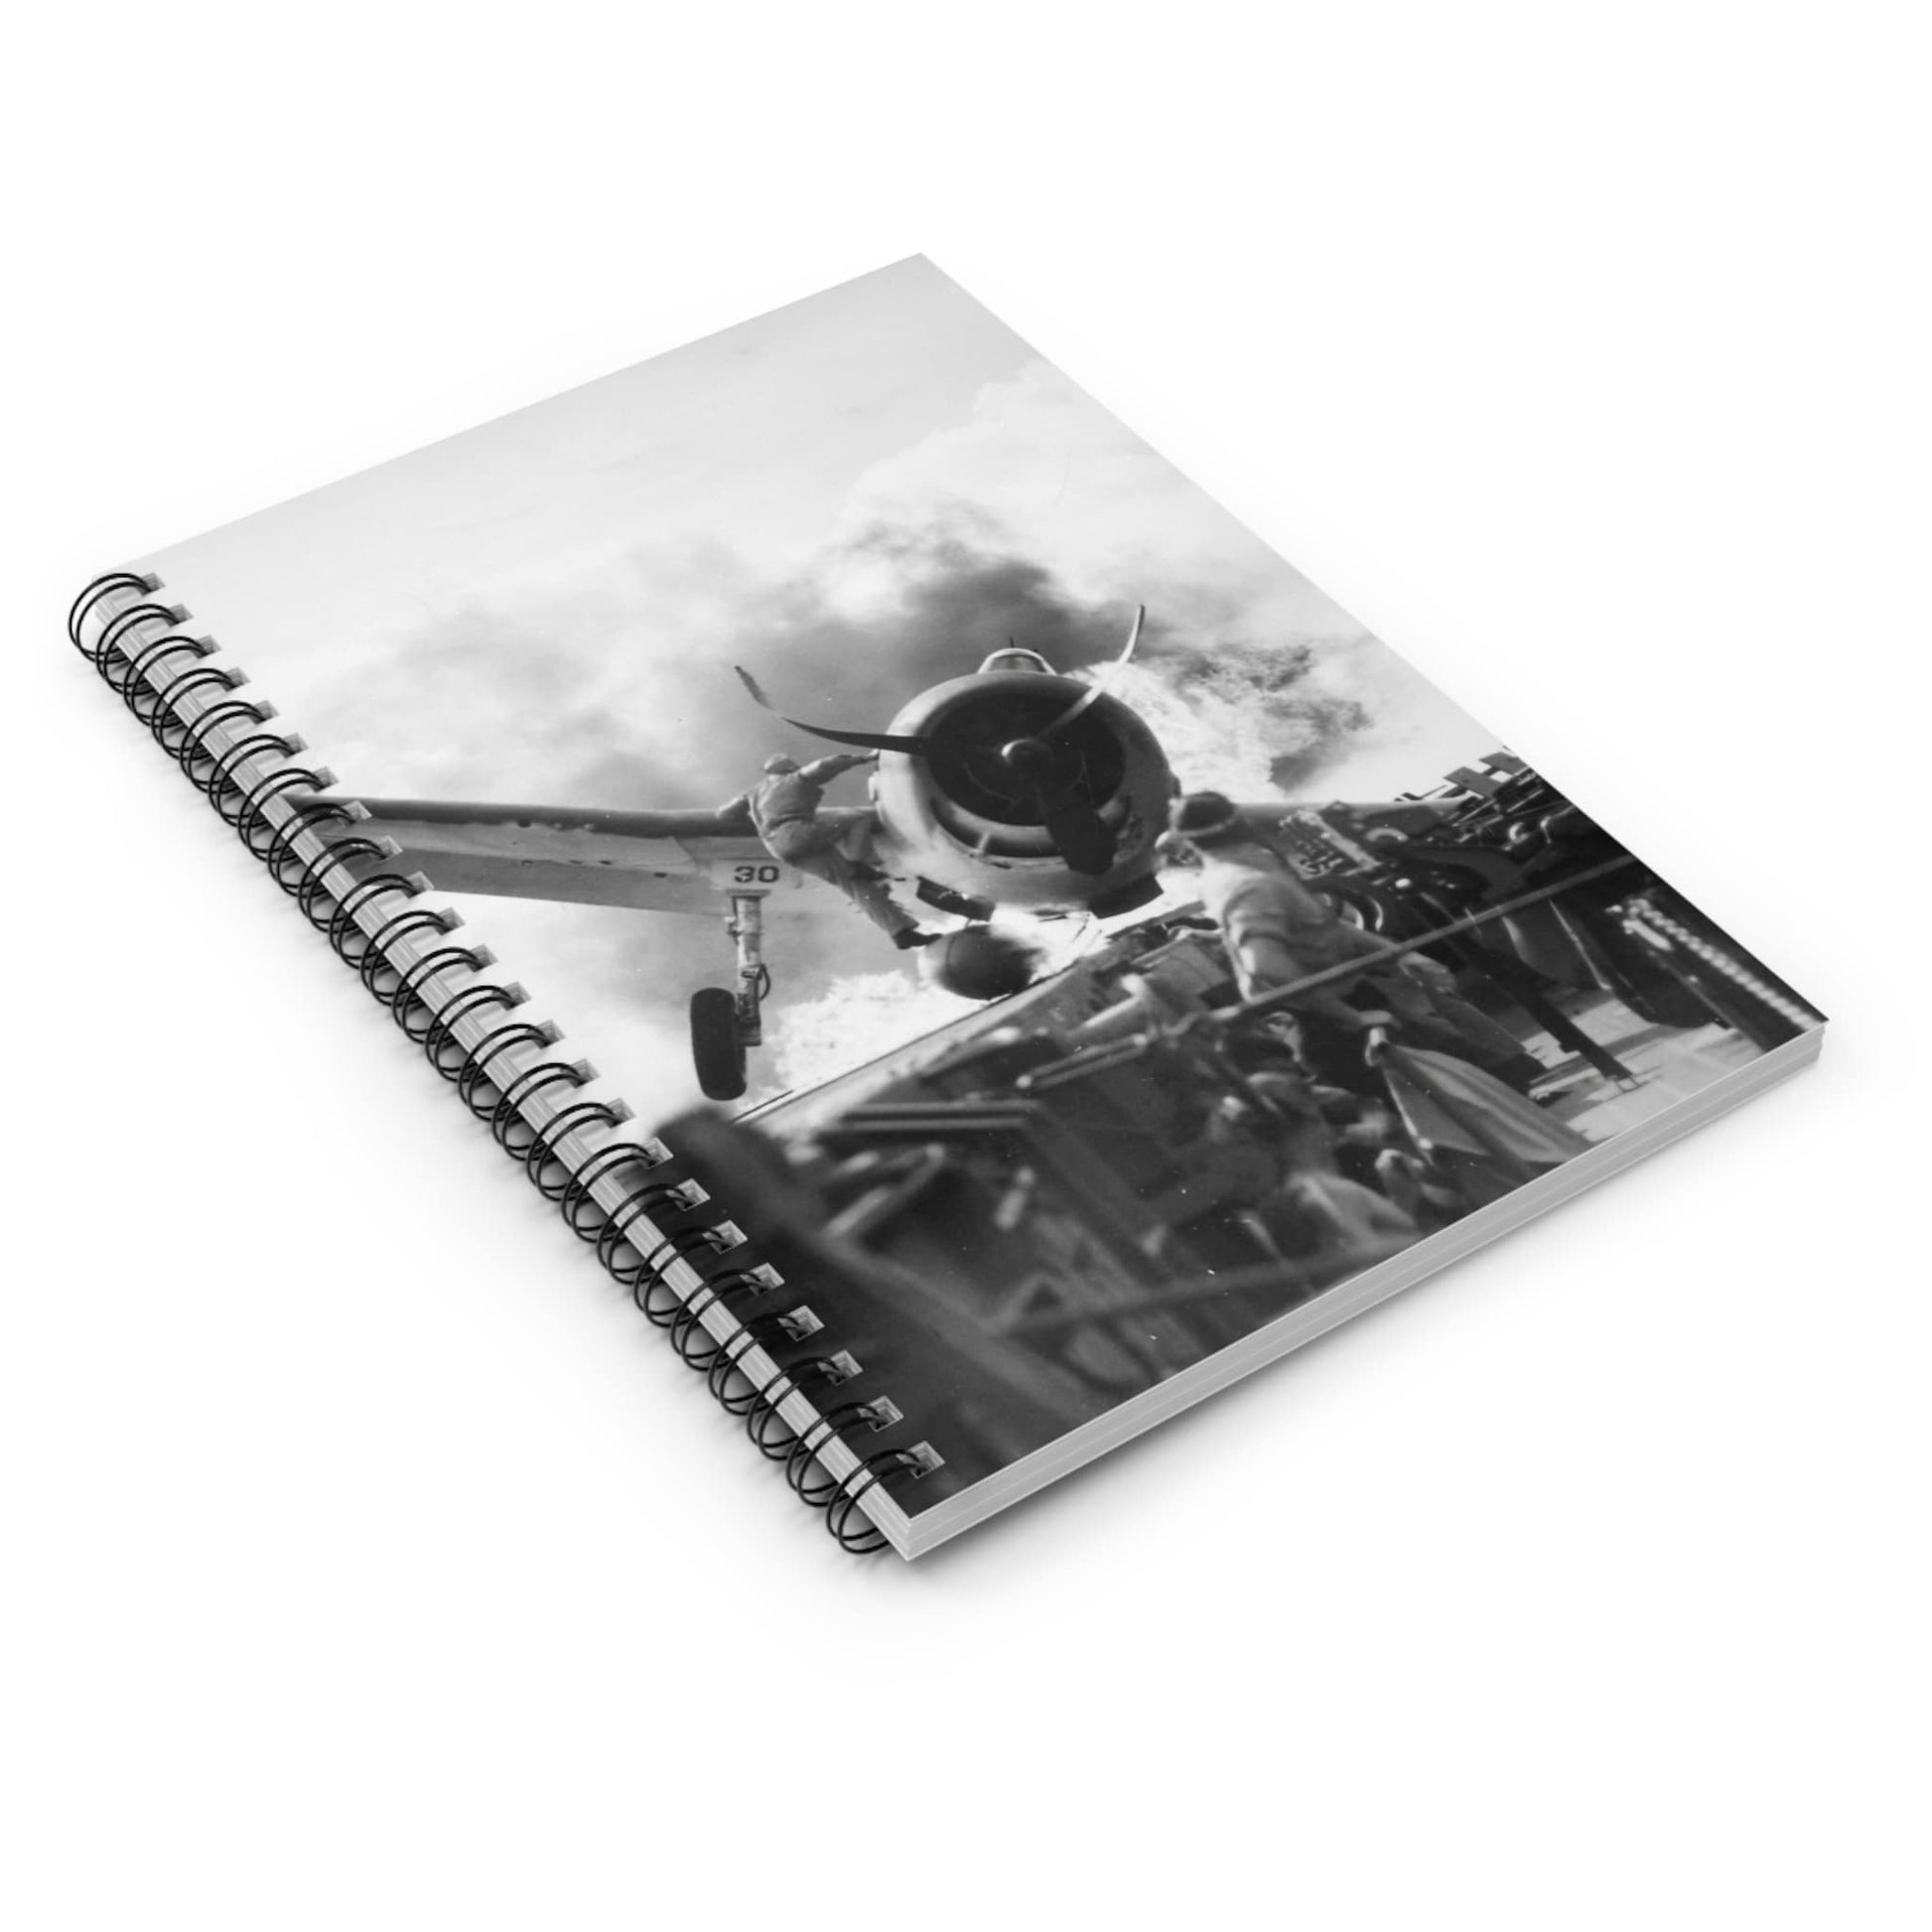 Vintage Plane Crash Photo Spiral Notebook Laying Flat on White Surface